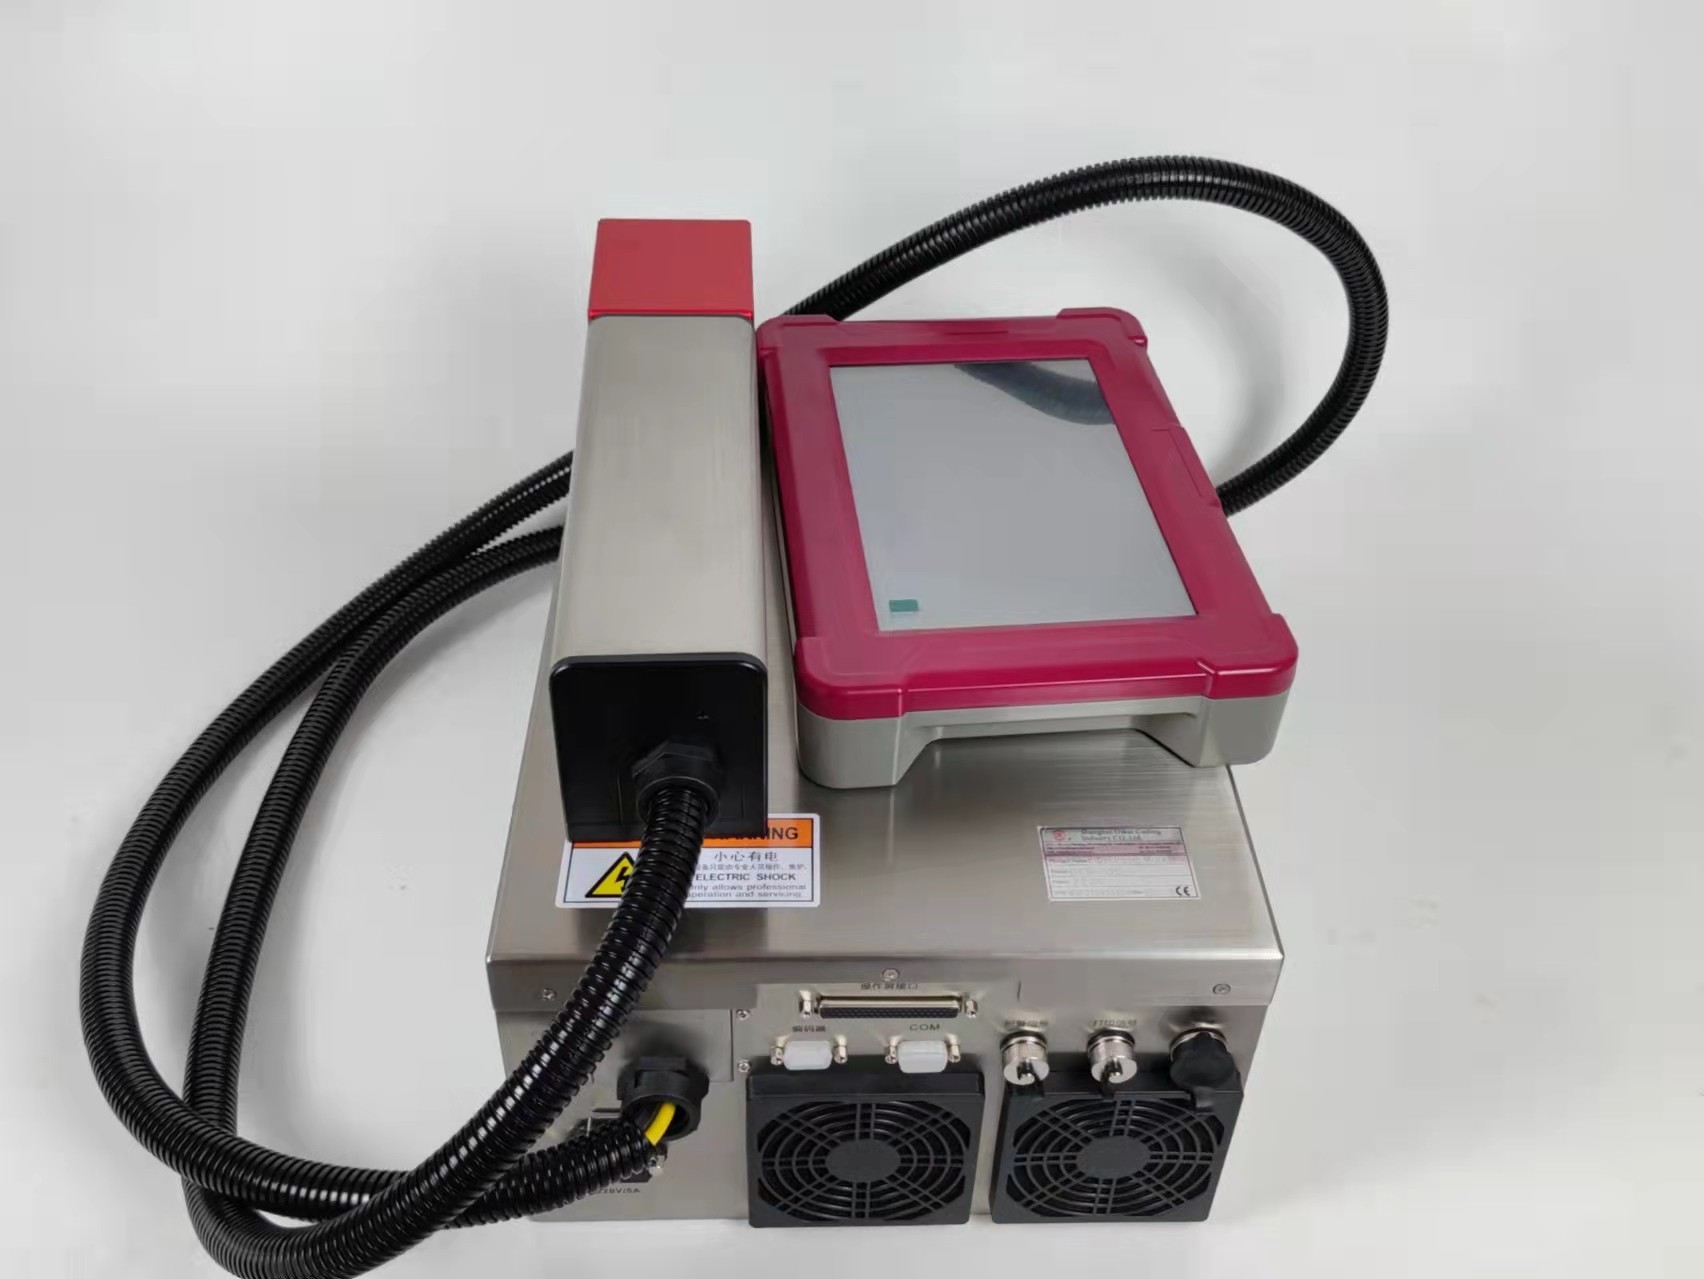 20W Fiber Laser Marking Machine QR Code Metal Laser Engraving Machine Online Date Printer for Packaging Machine